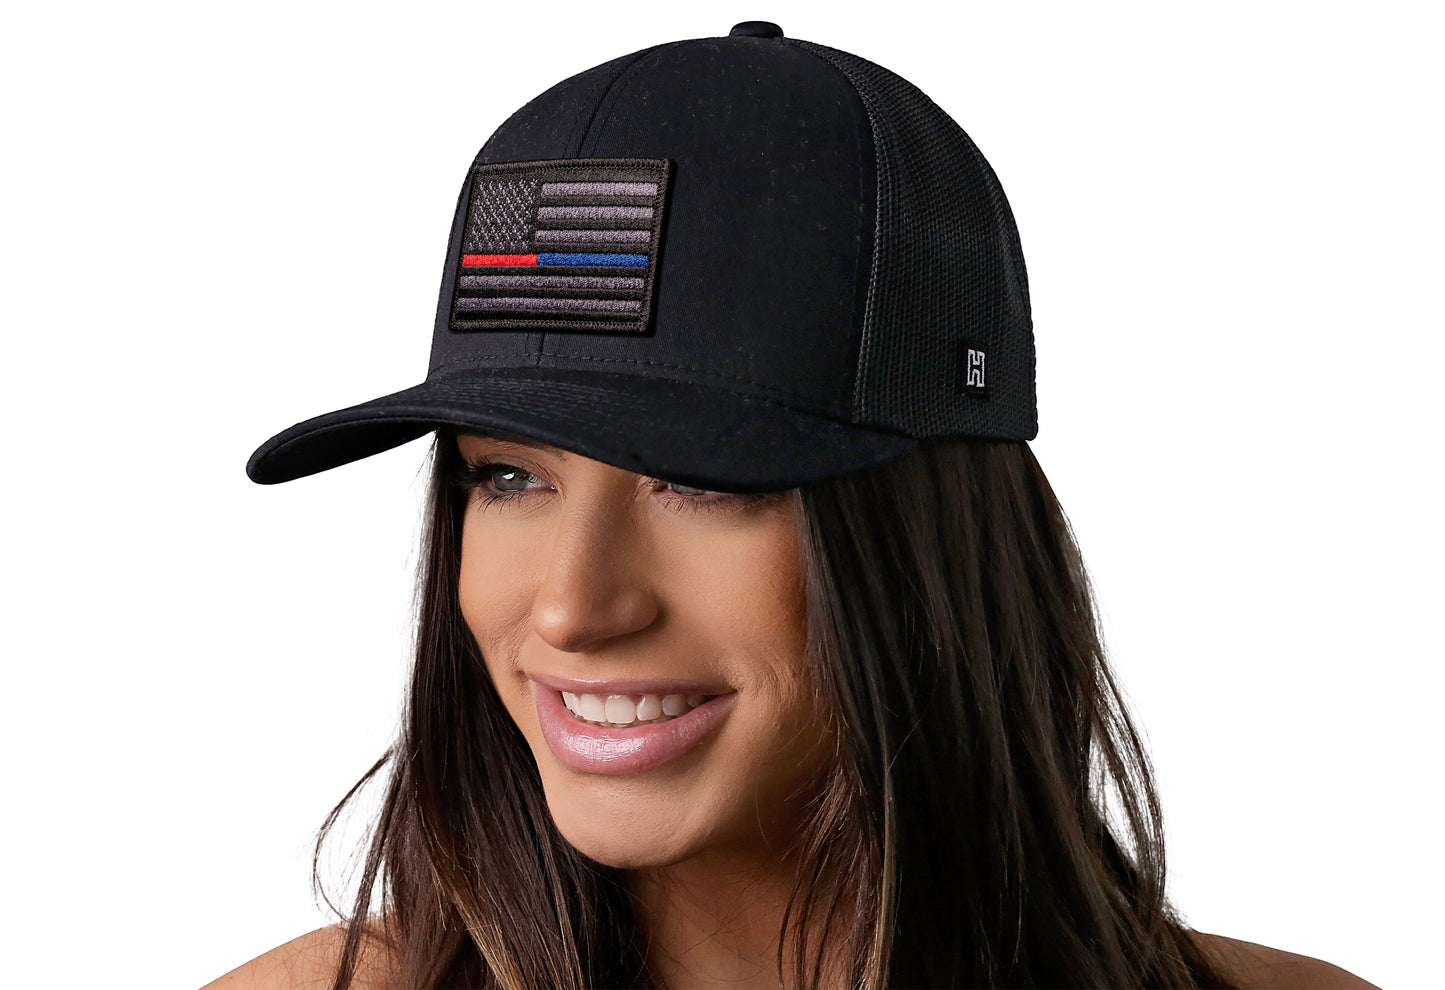 Thin Red & Blue Line Trucker Hat  |  Black 1st Responders Snapback